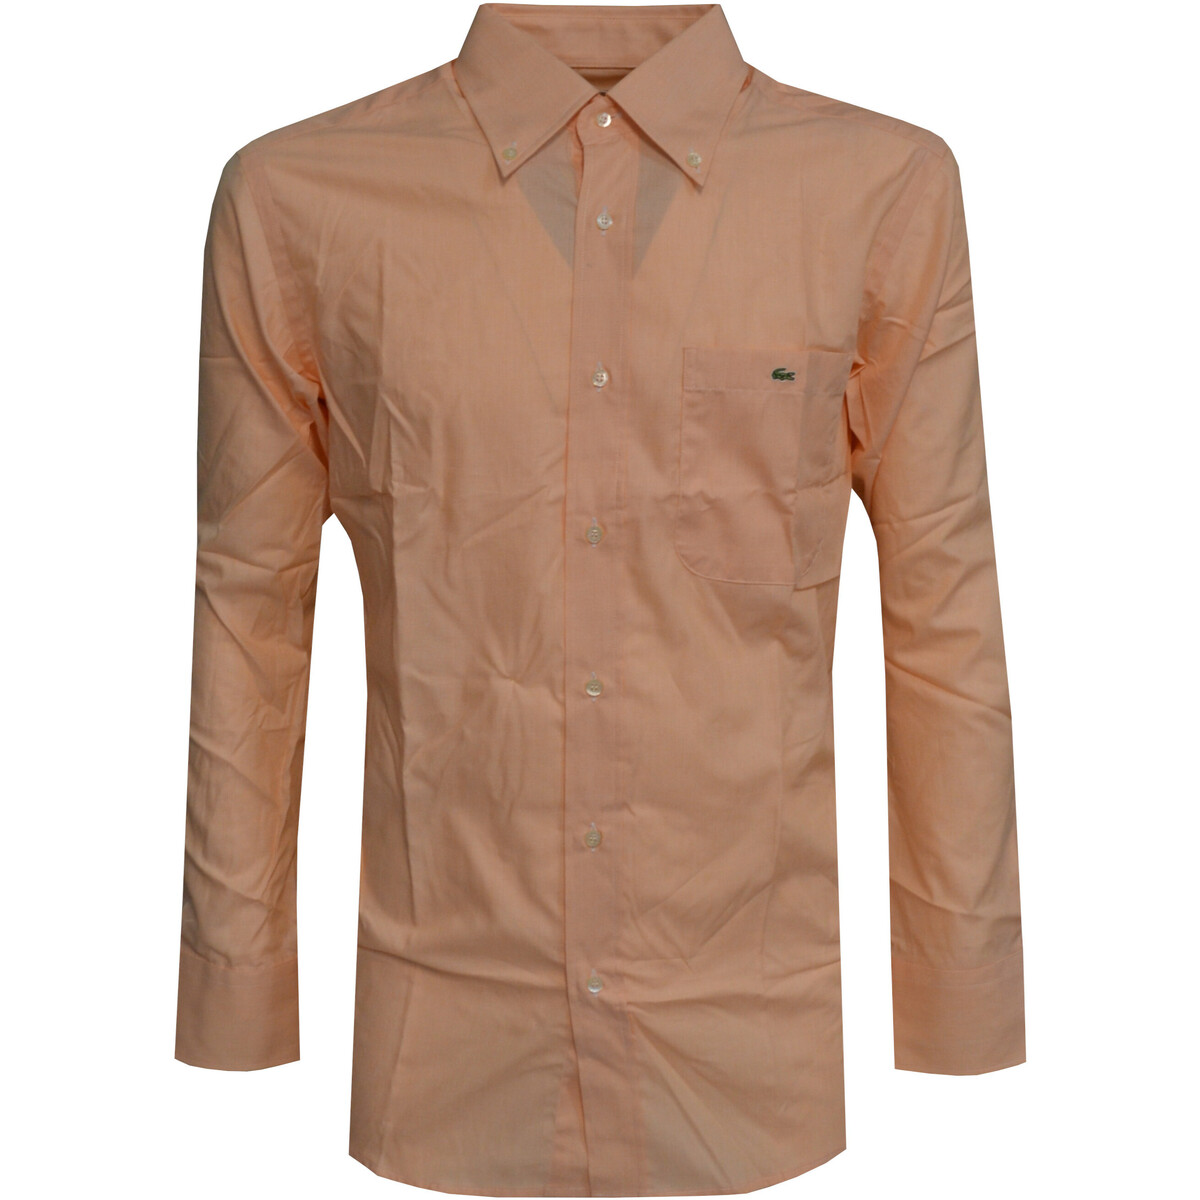 textil Hombre Camisas manga larga Lacoste CH2184 Naranja